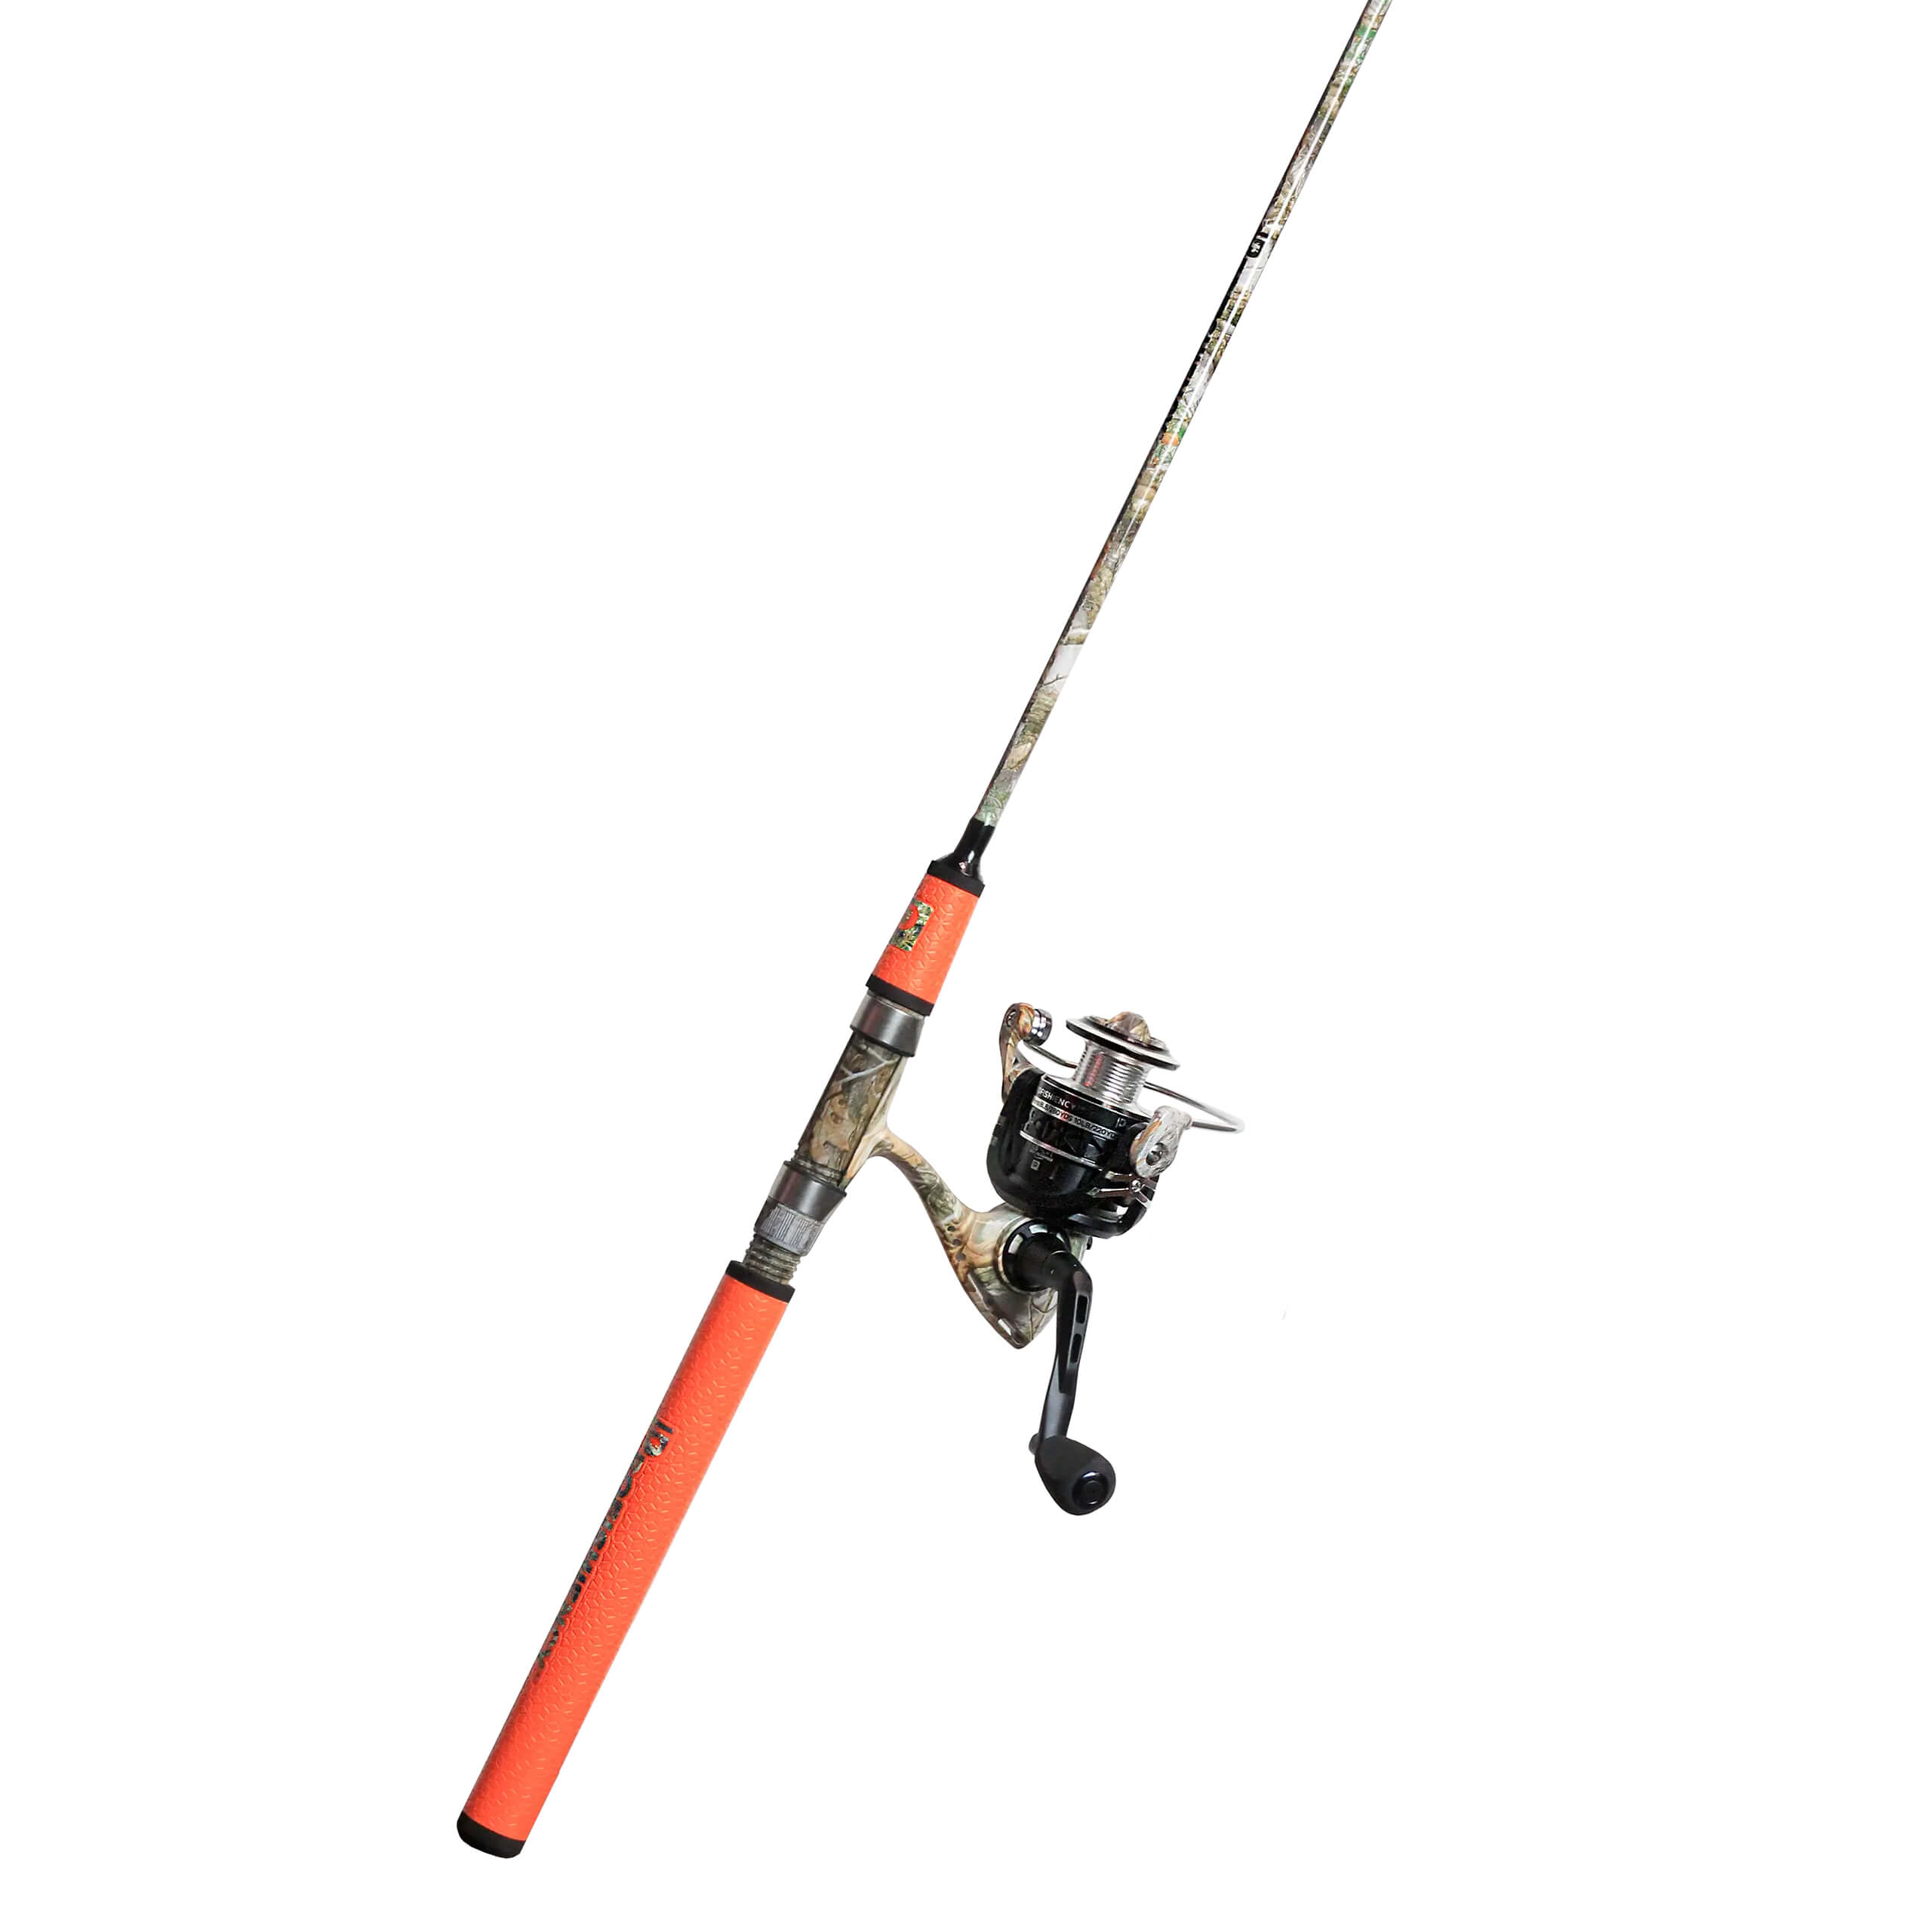 2 Winn Fishing Reel Grip Sleeves Straight Type RGSS-ORB Orange & Black Camo